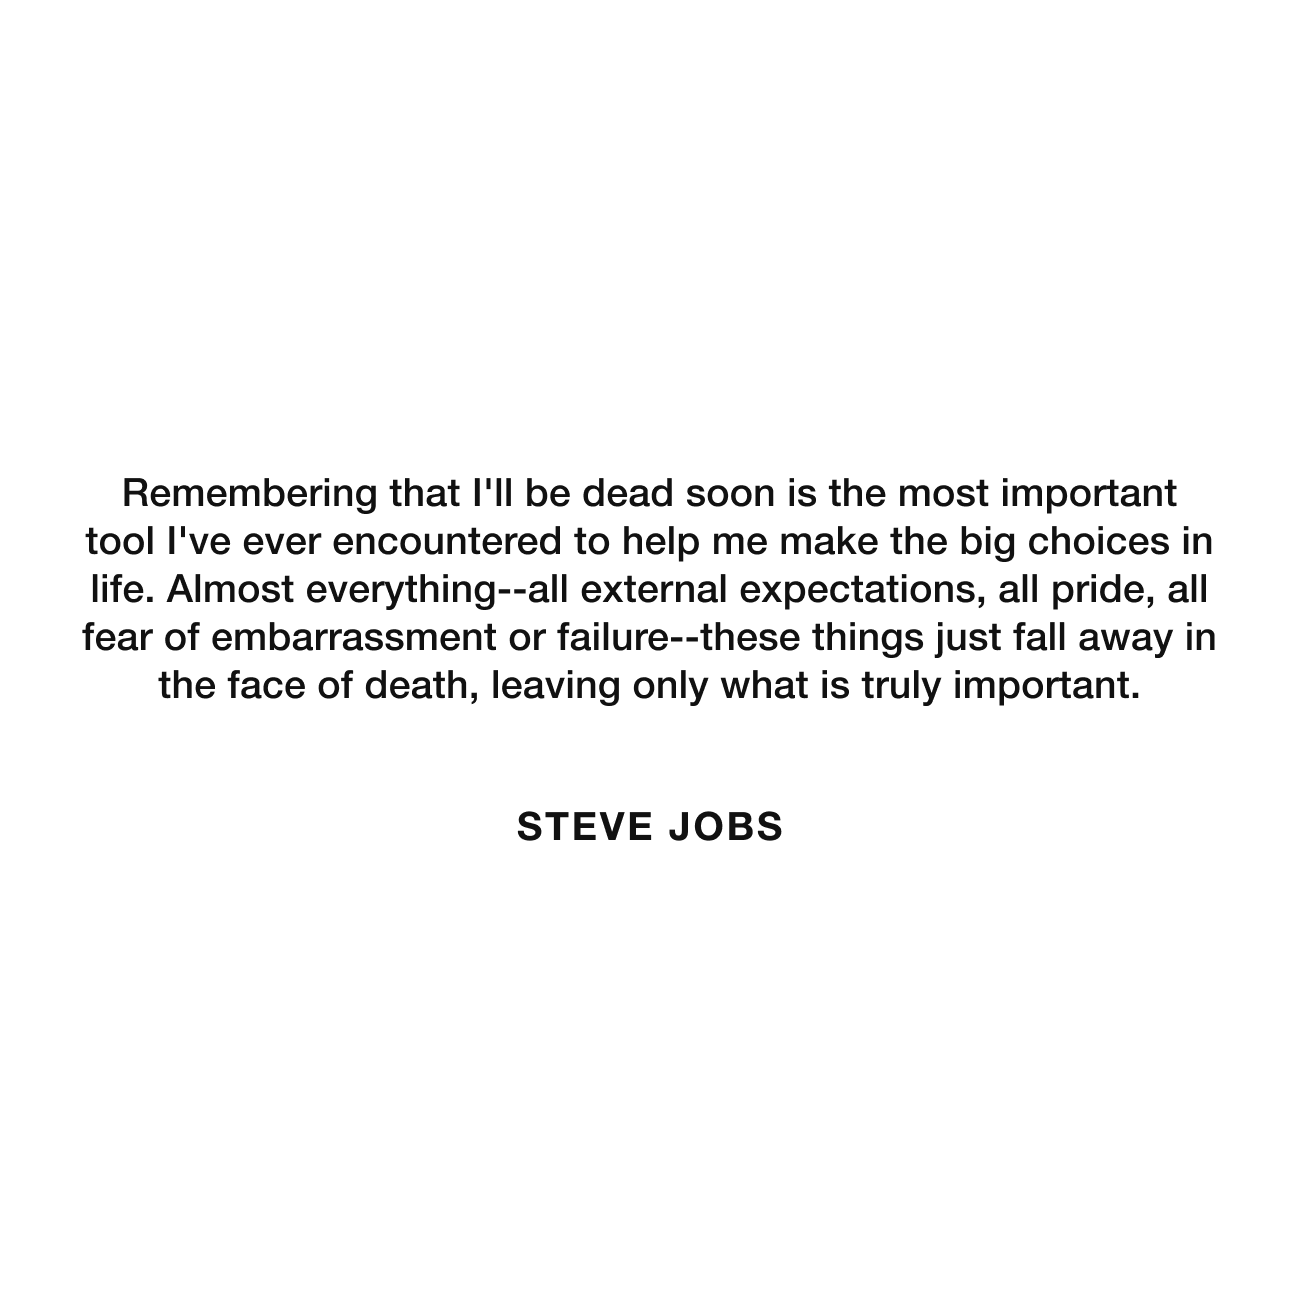 Steve Jobs Memento Mori Quote - Stoic Reflections